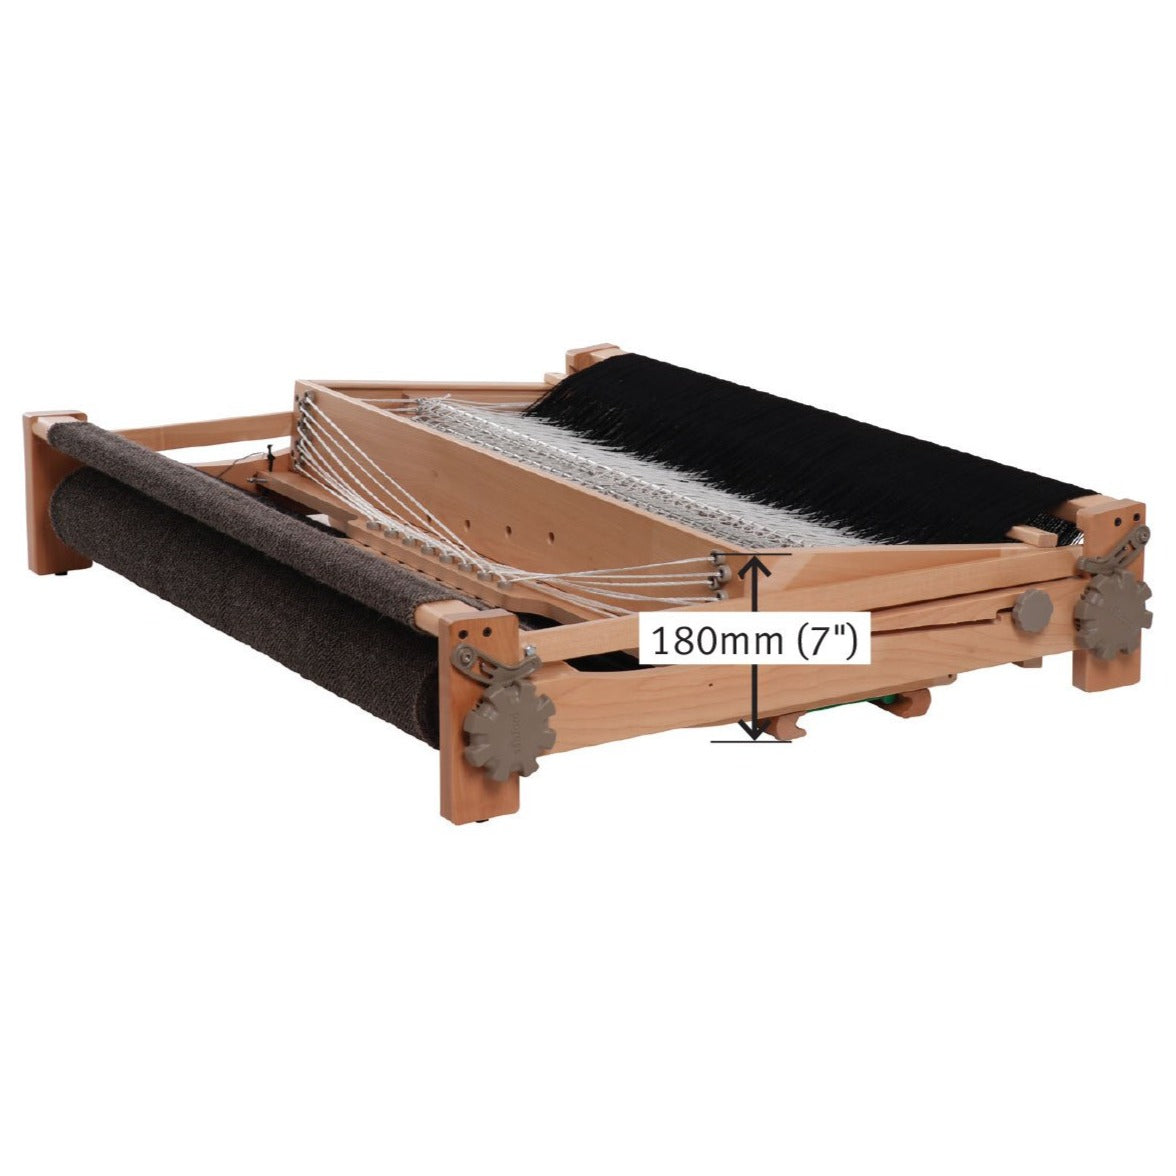 Ashford portable table loom with 4 shafts - Thread Collective Australia